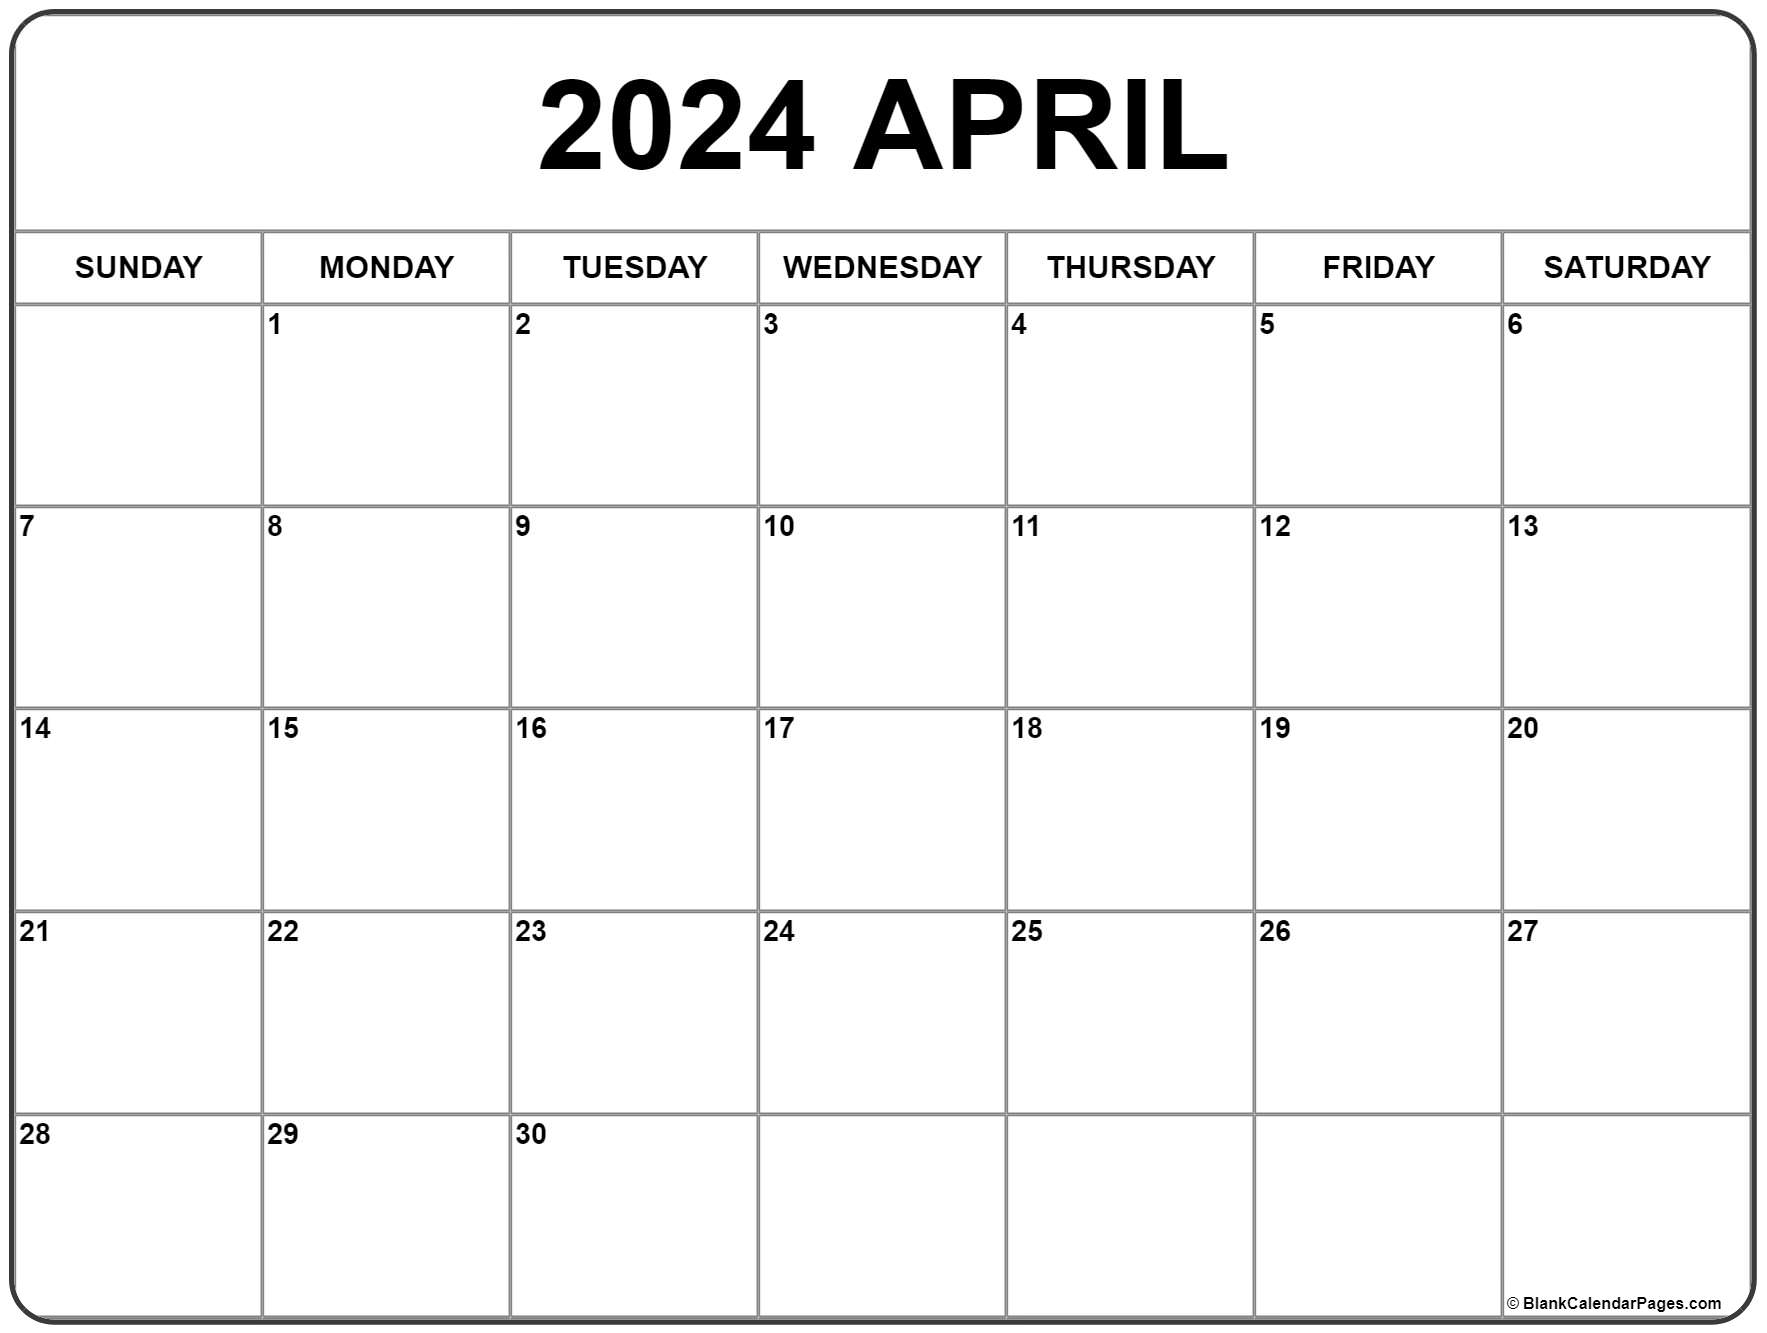 April 2024 Calendar | Free Printable Calendar intended for Free Editable April 2024 Calendar